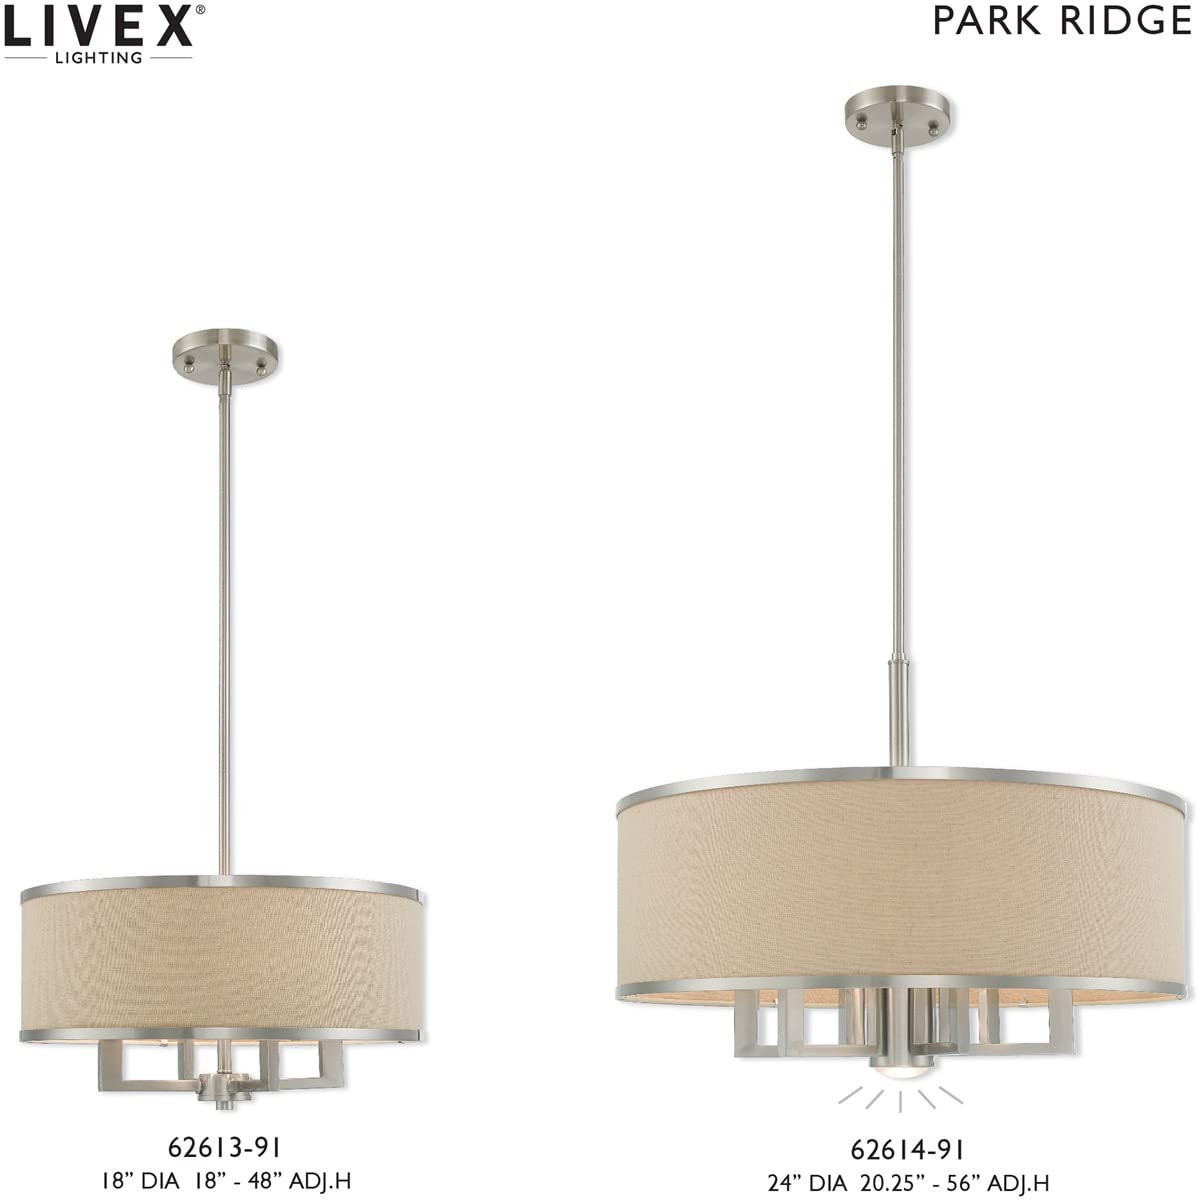 Livex Lighting 62614-91 Park Ridge - Seven Light Chandelier, Brushed Nickel Finish with Ash-Gray Linen Fabric Shade